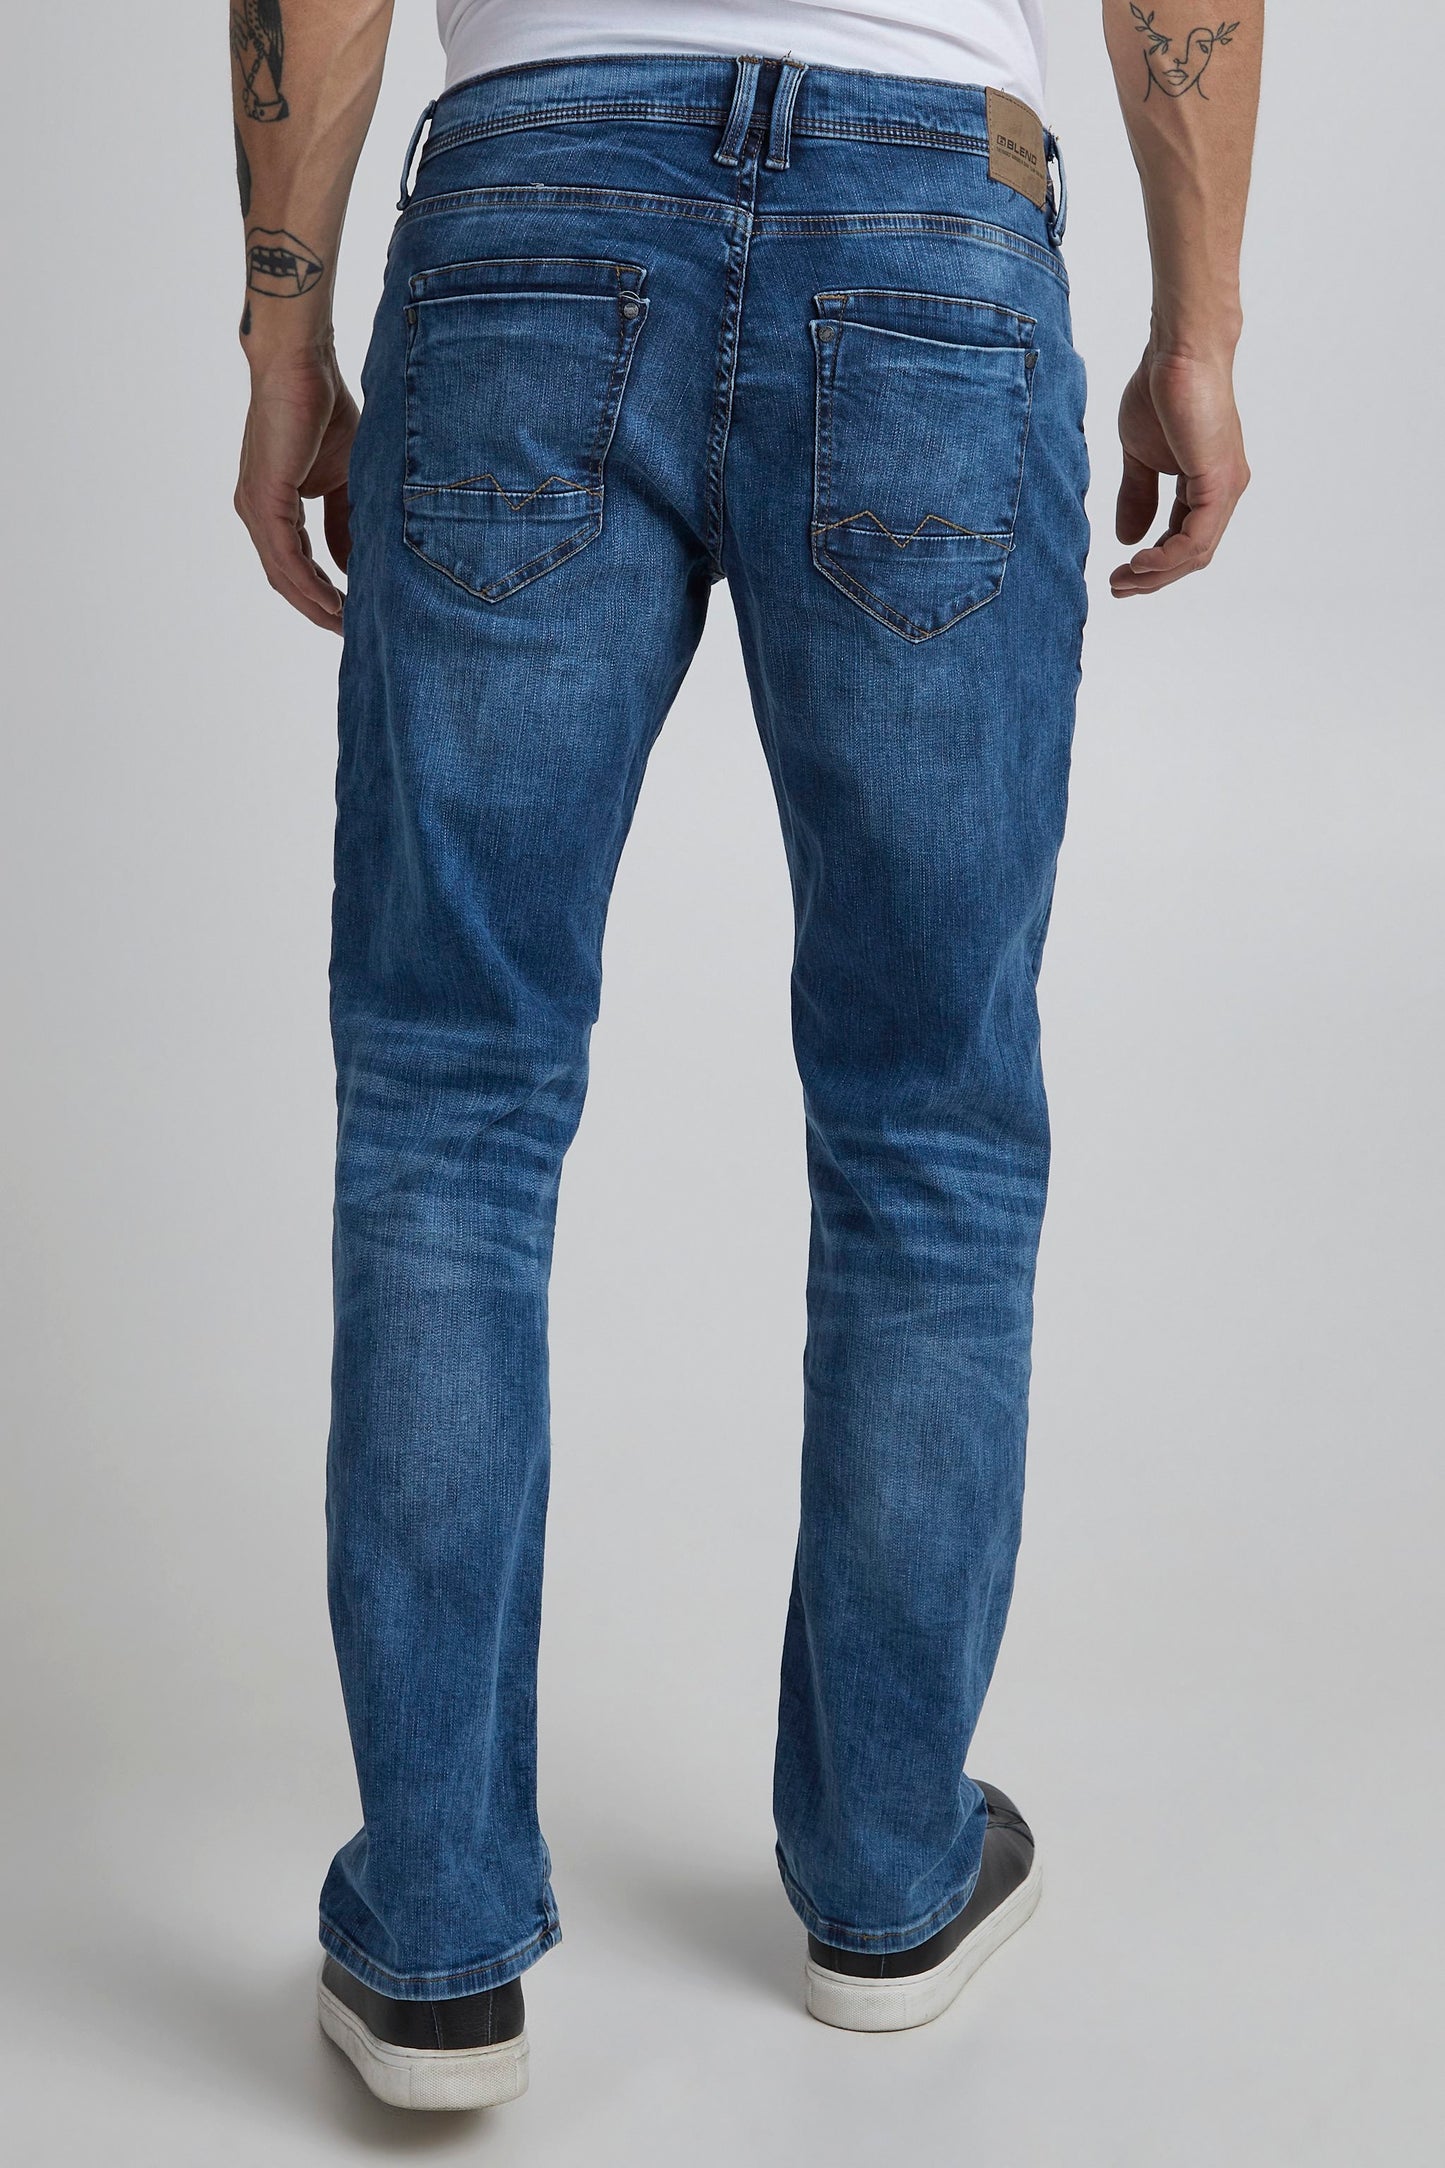 JETBH Jeans - Slim Fit  / Regular Waist